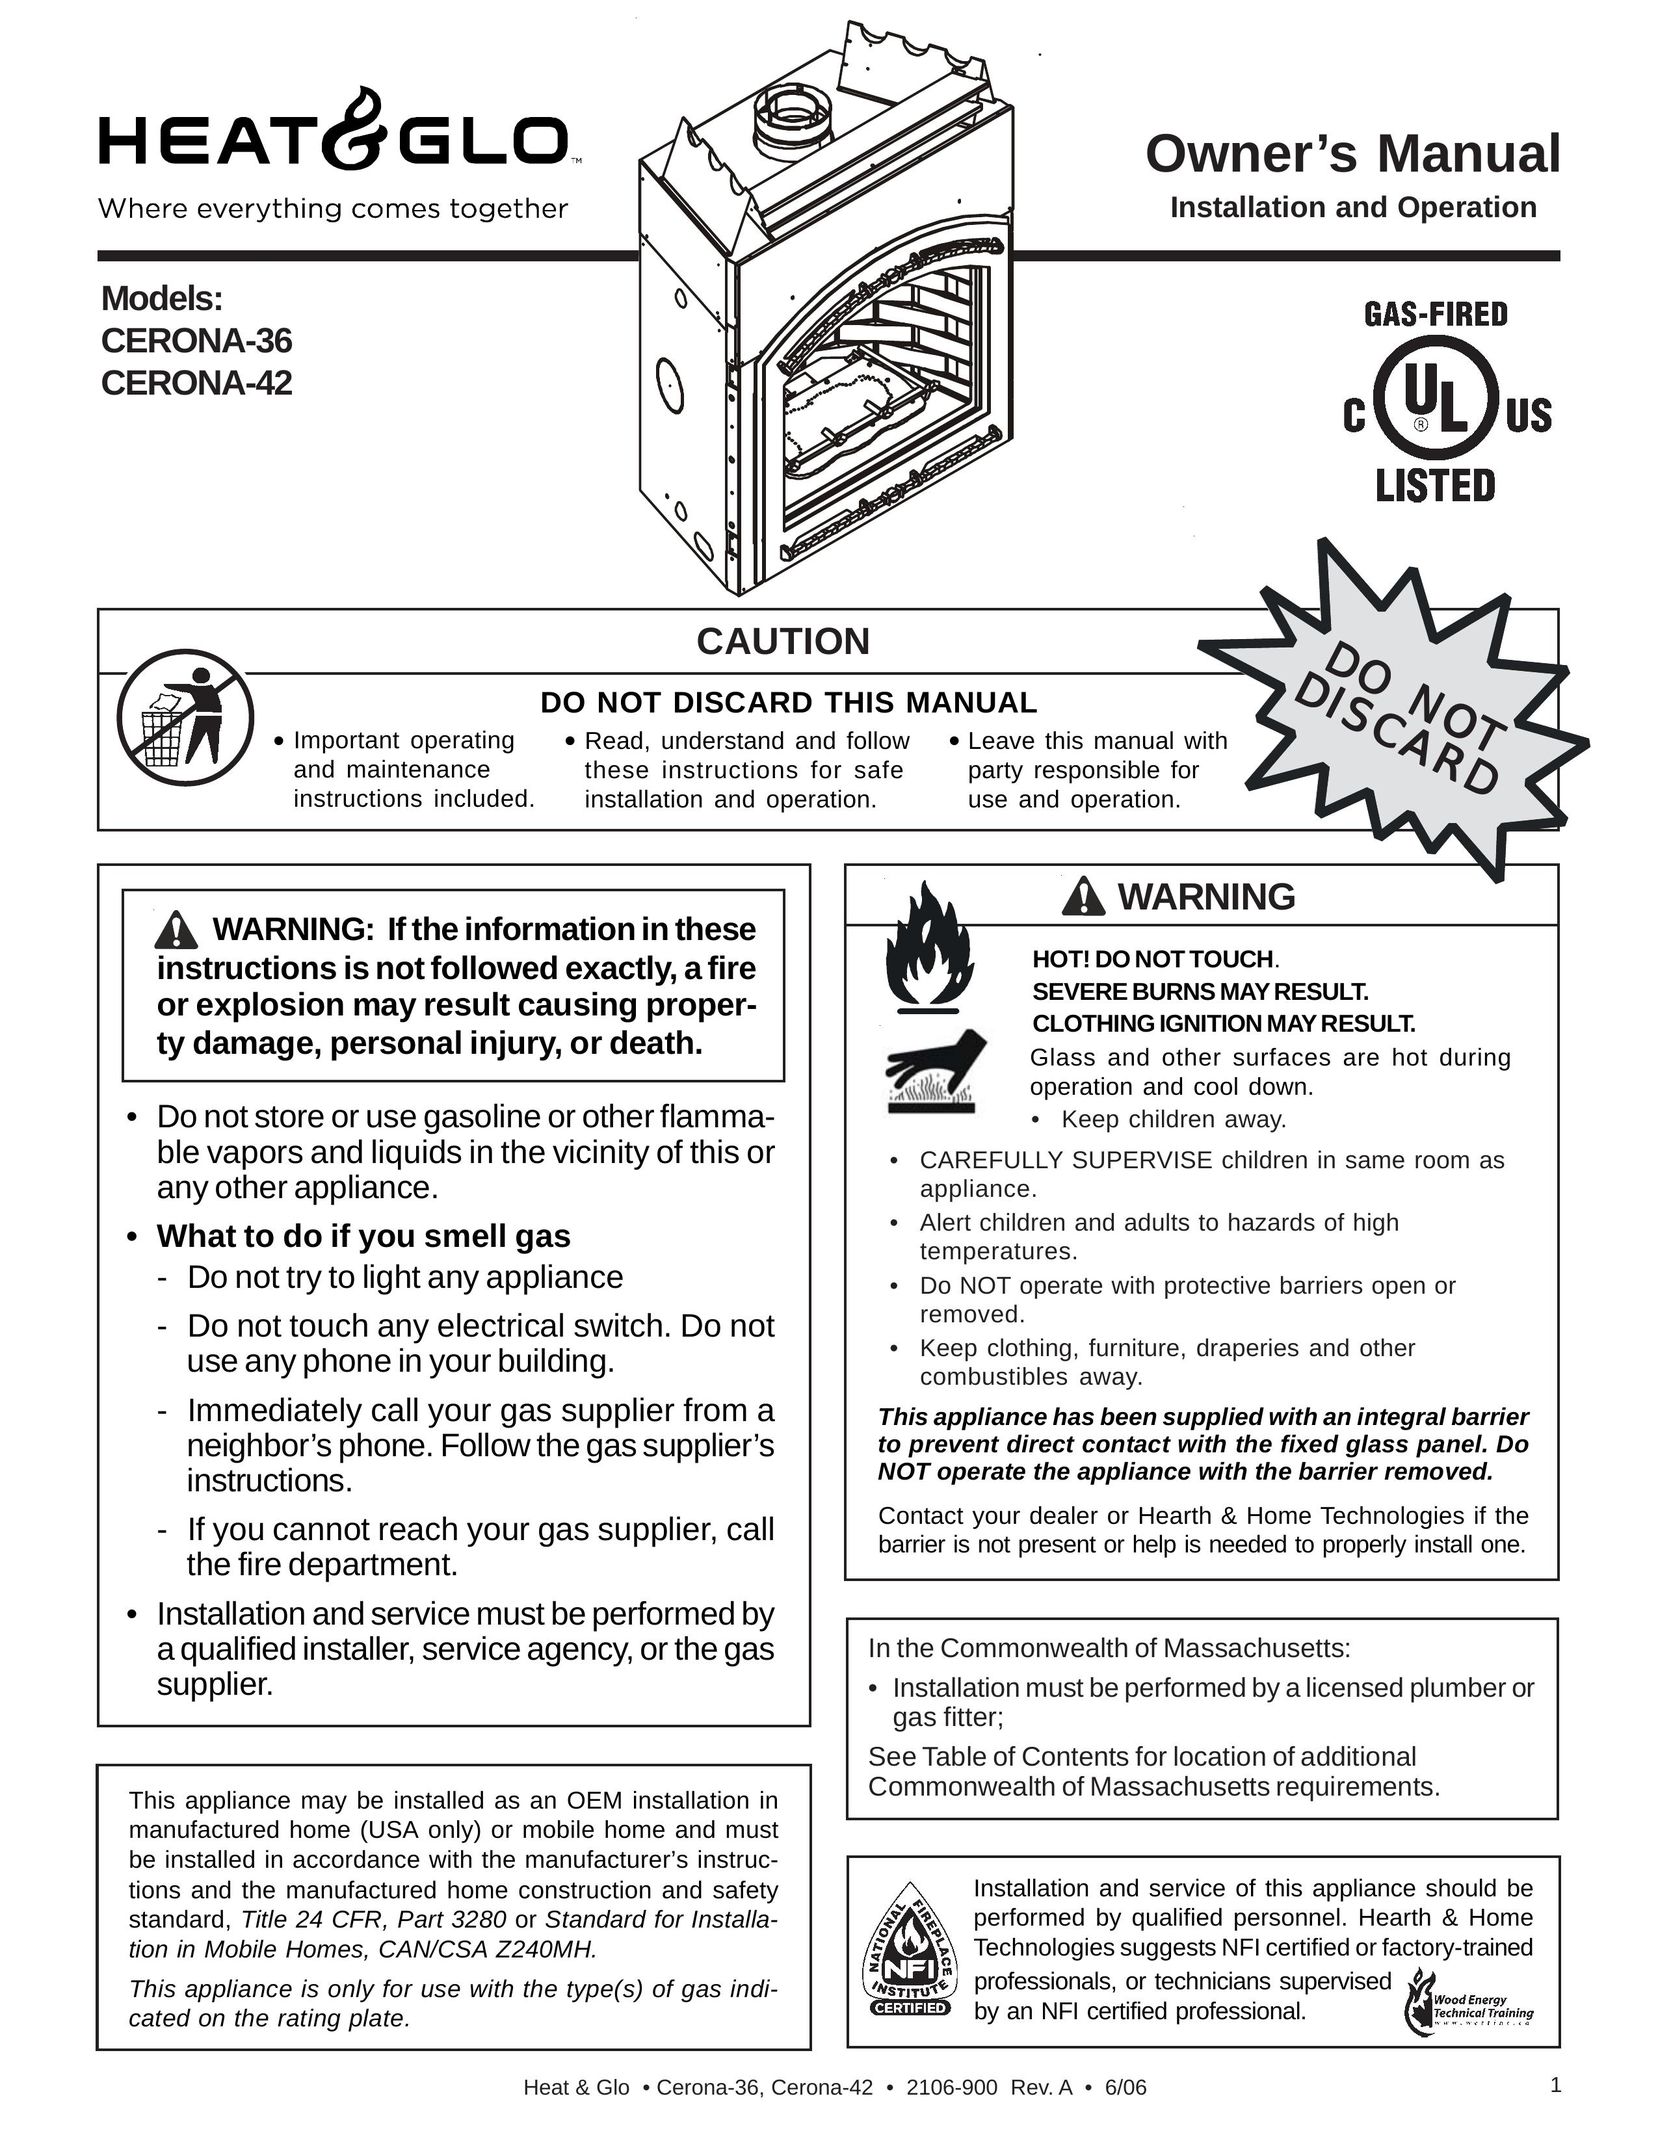 Heat & Glo LifeStyle CERONA-42 Gas Heater User Manual